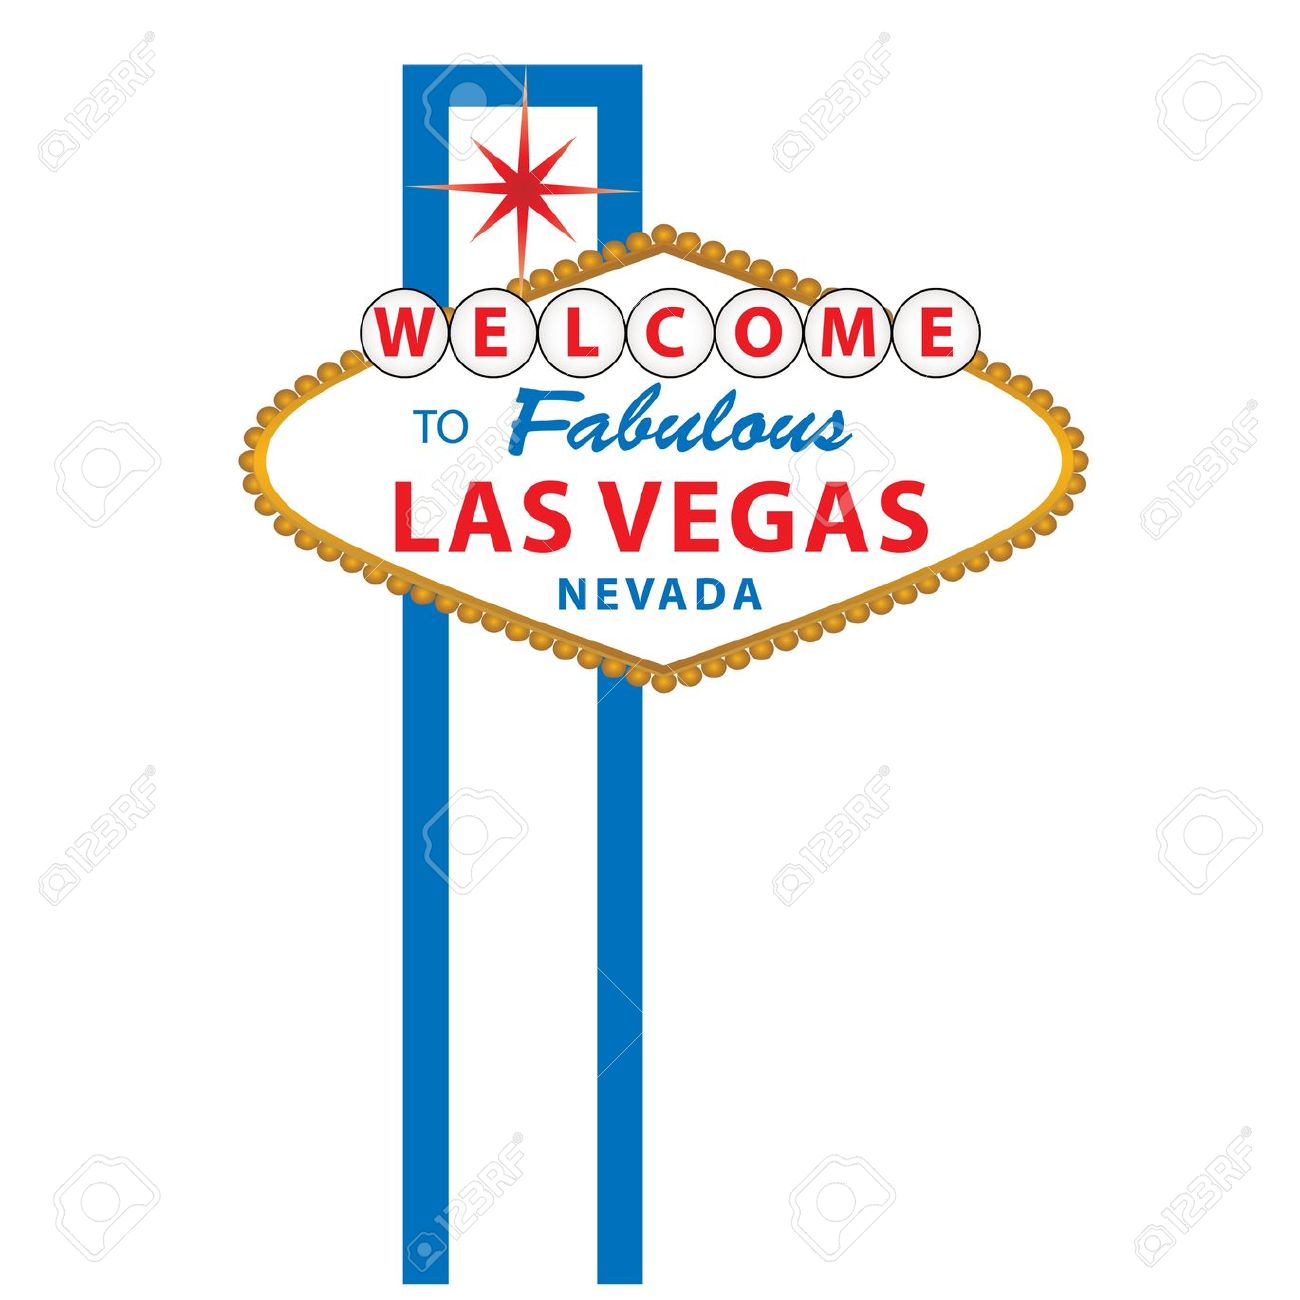 las vegas: Welcome to Fabulou - Las Vegas Clip Art